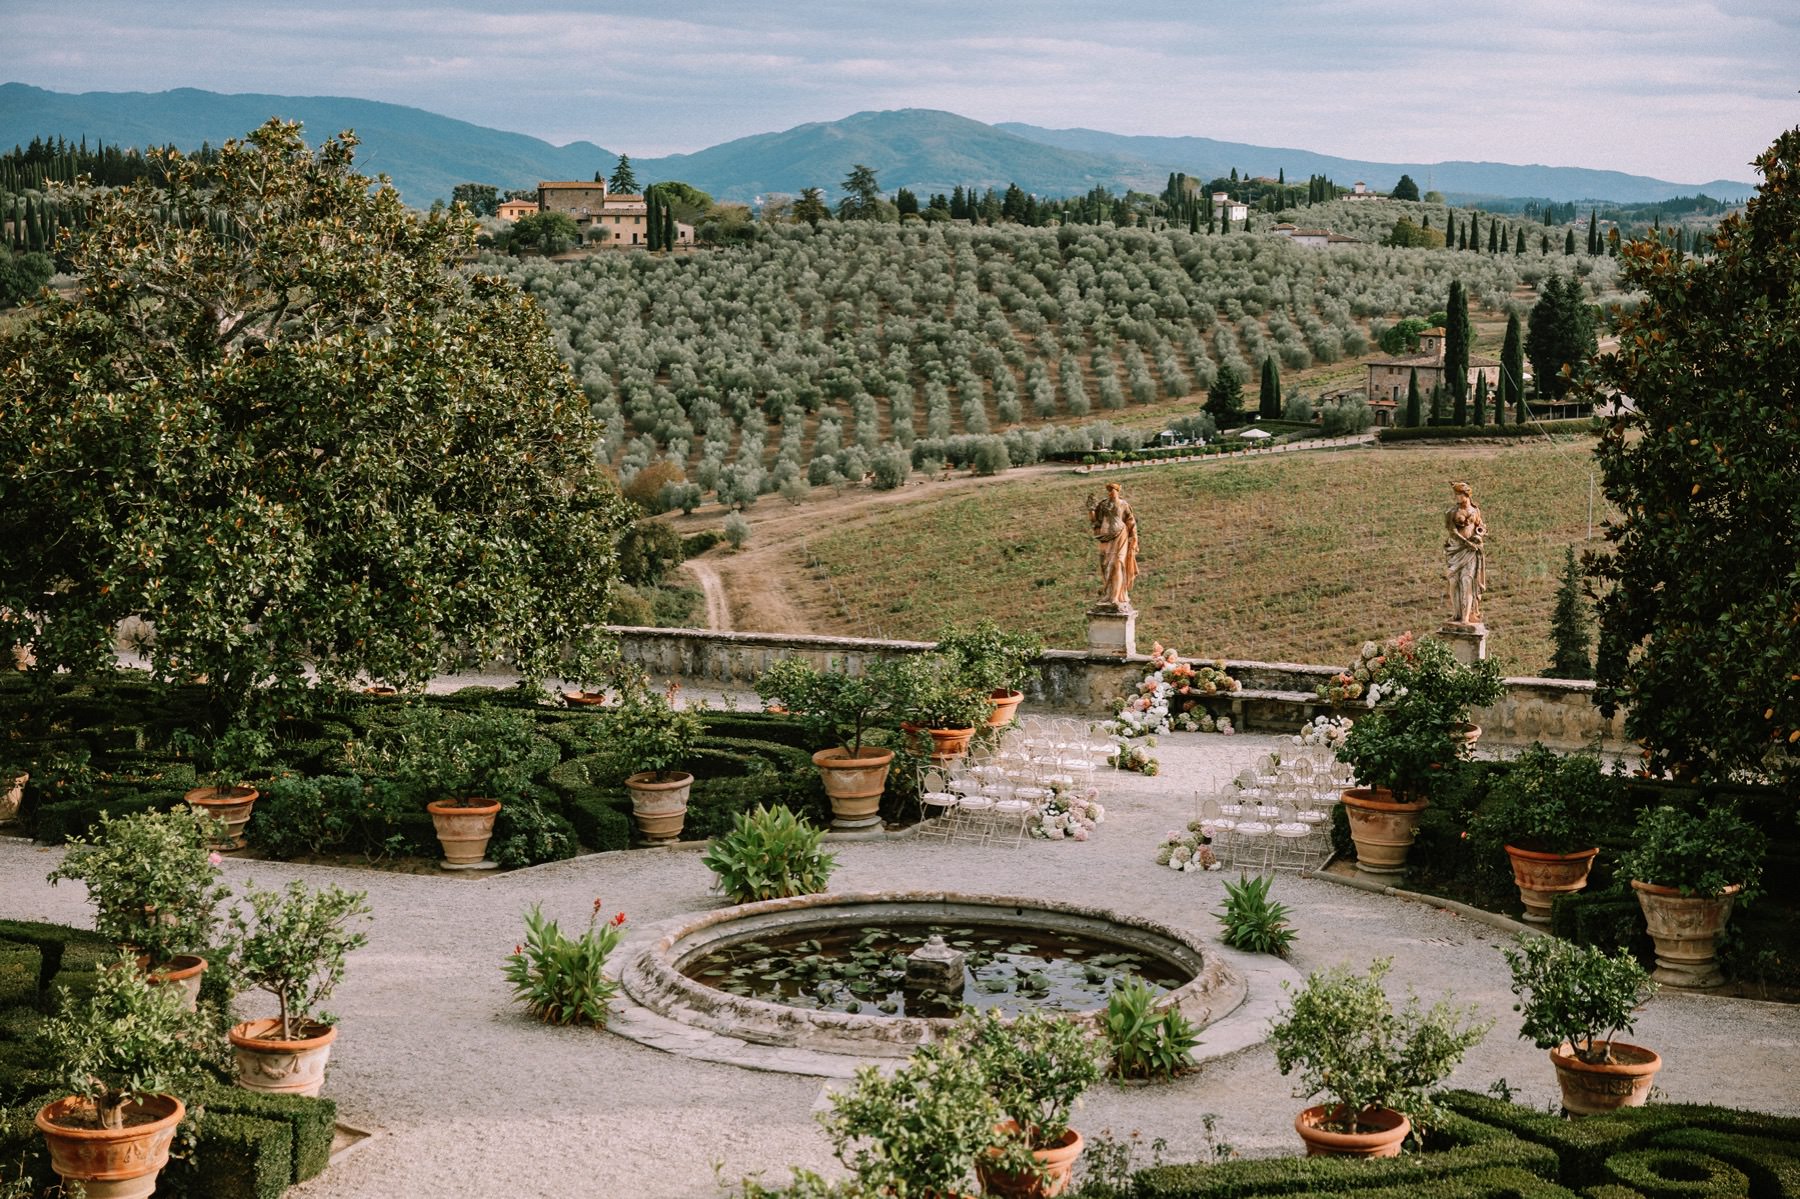 Tuscan dream wedding venue